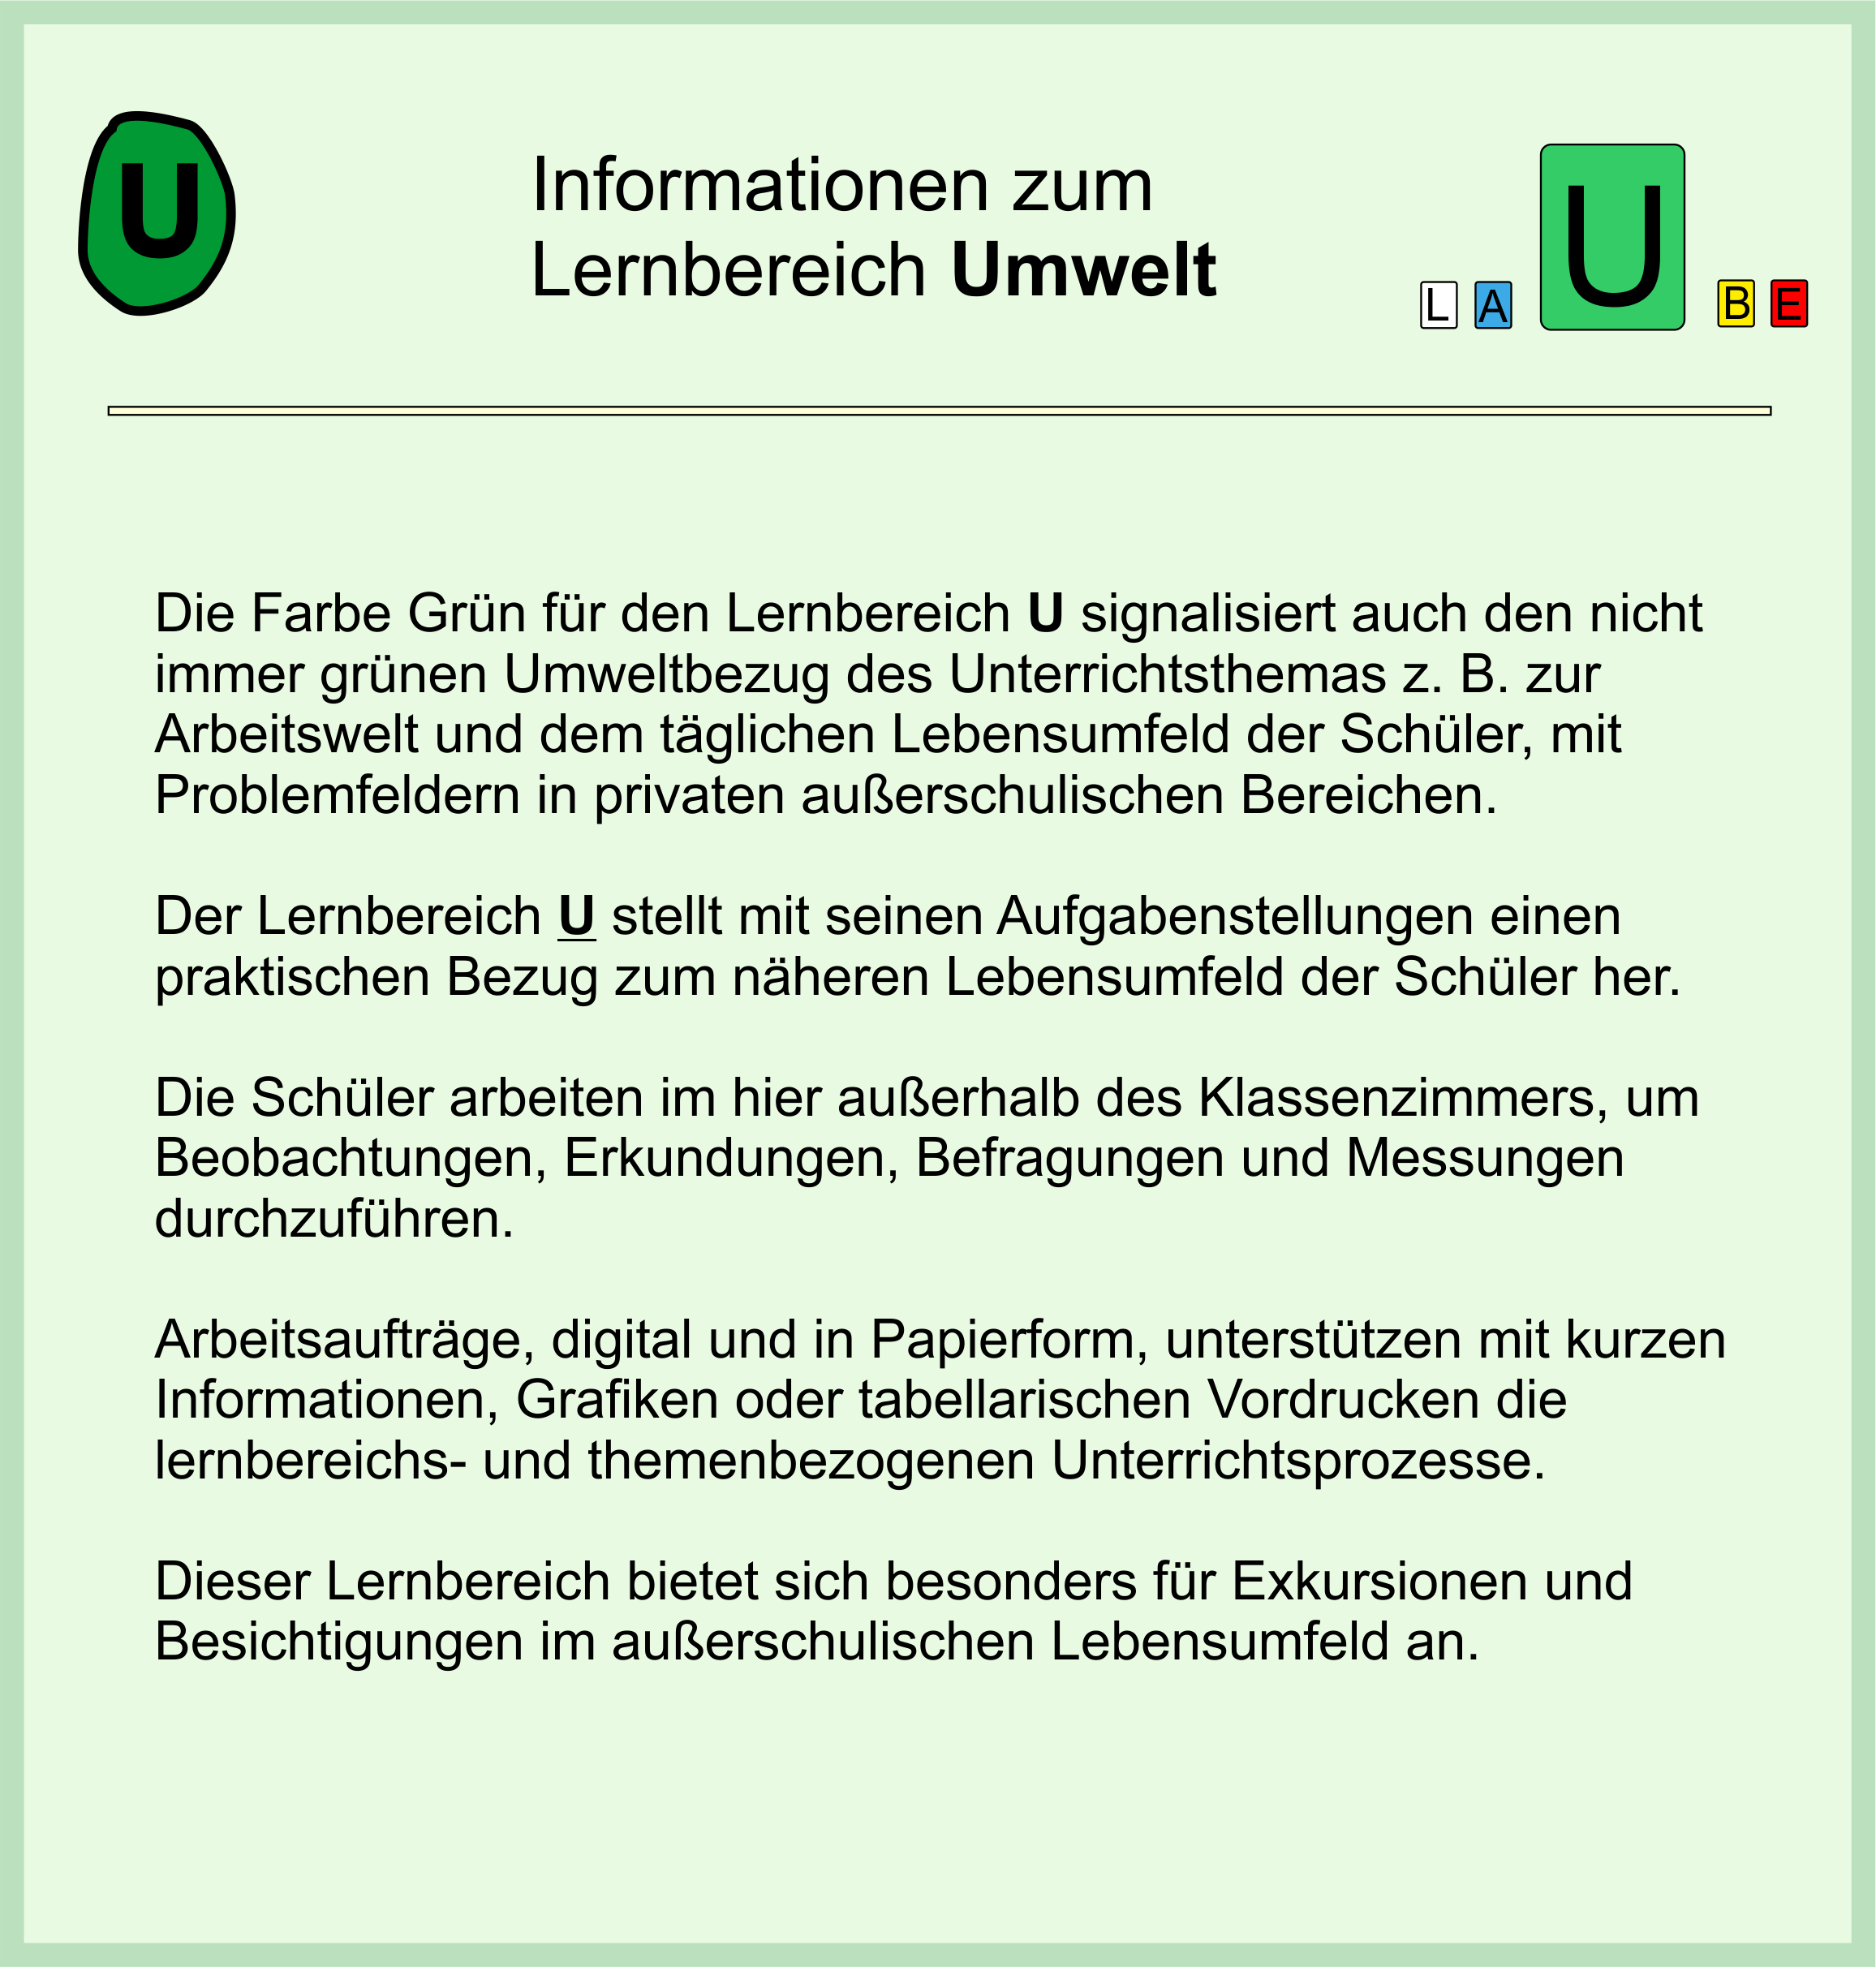 LAUBEInfoblatt U5